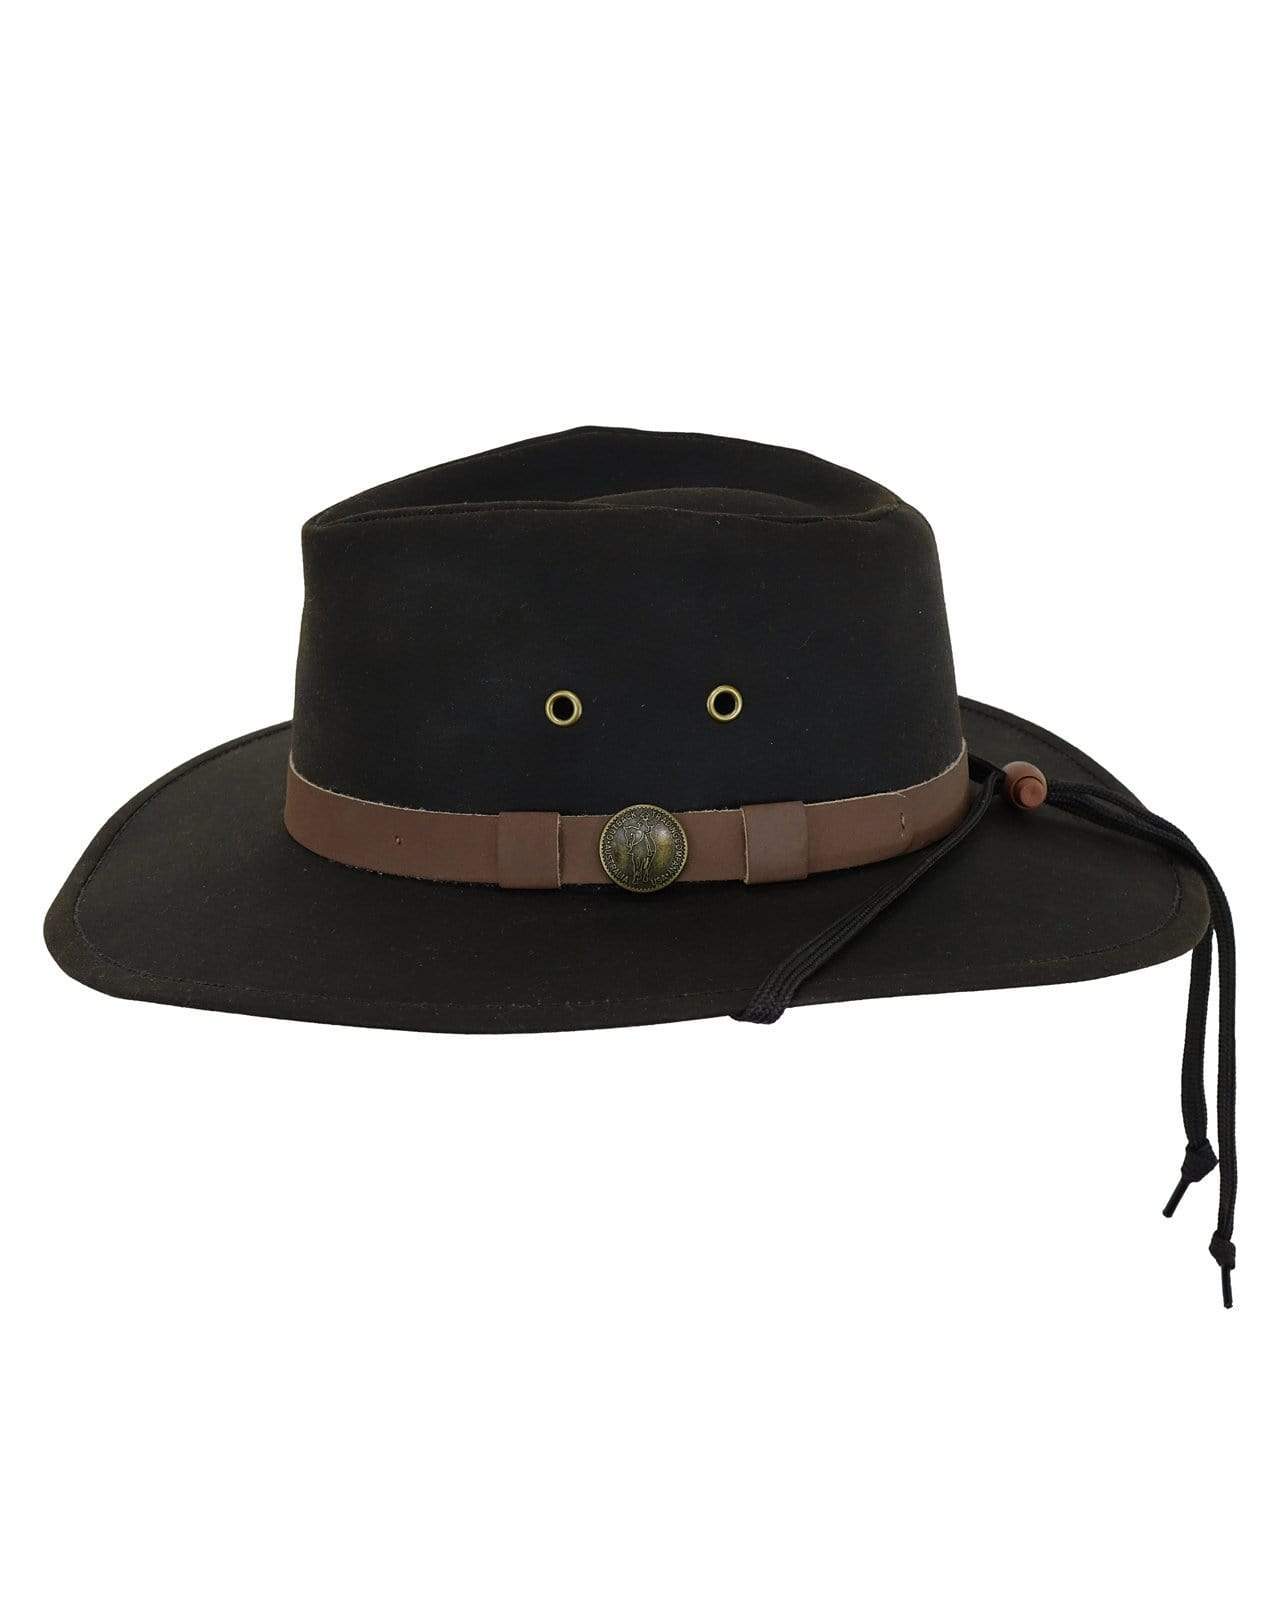 Outback Trading Company Kodiak Hats